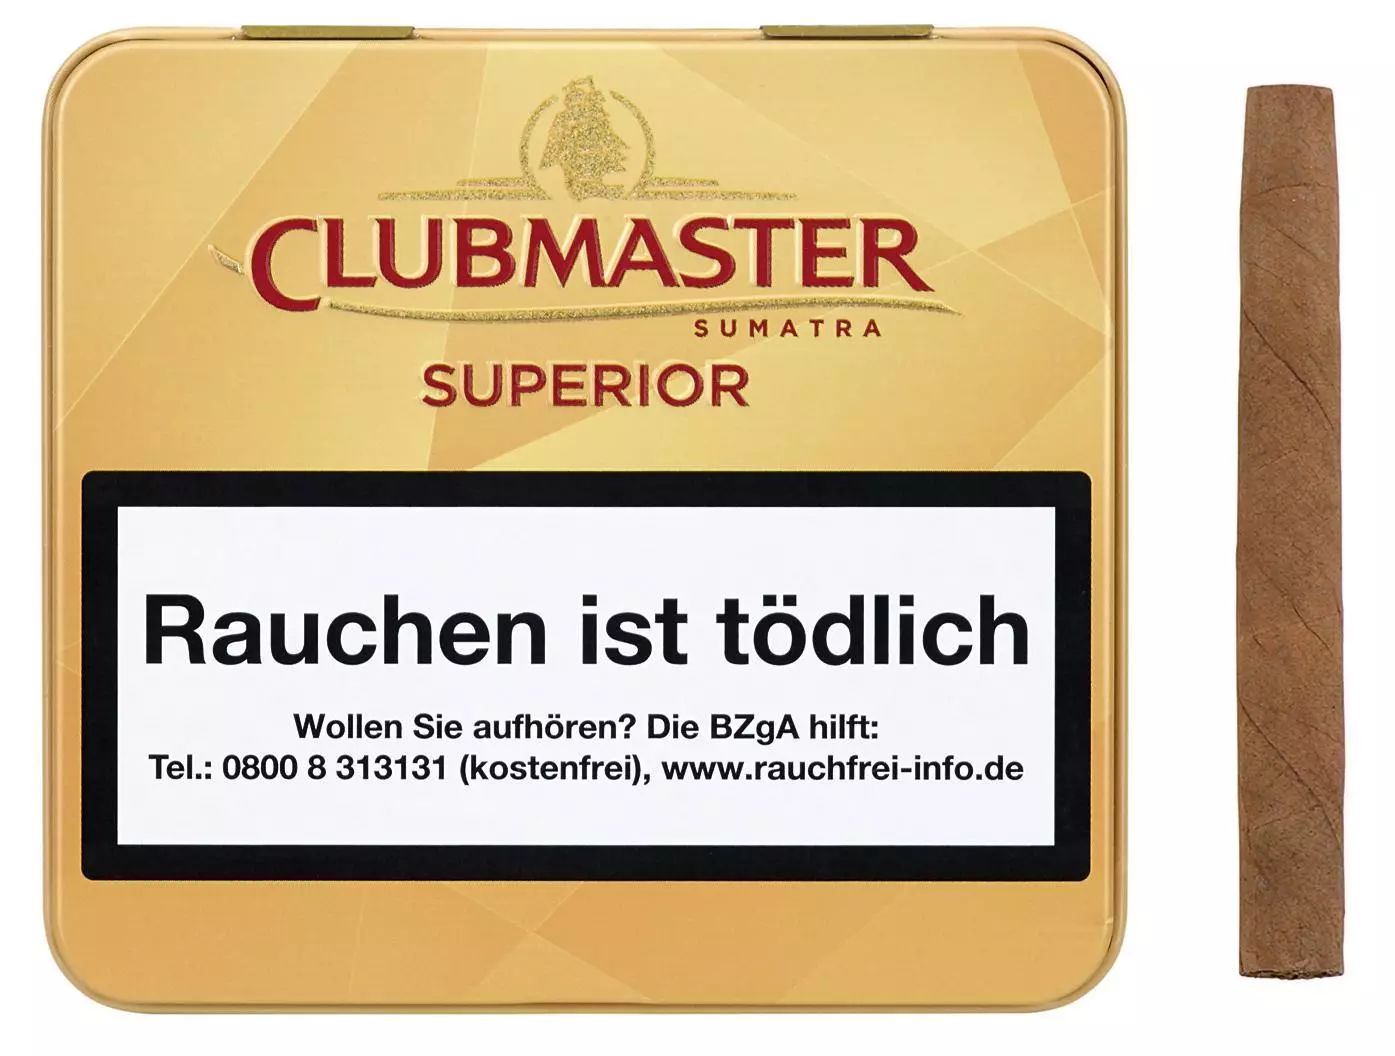 Clubmaster Superior Sumatra No. 141